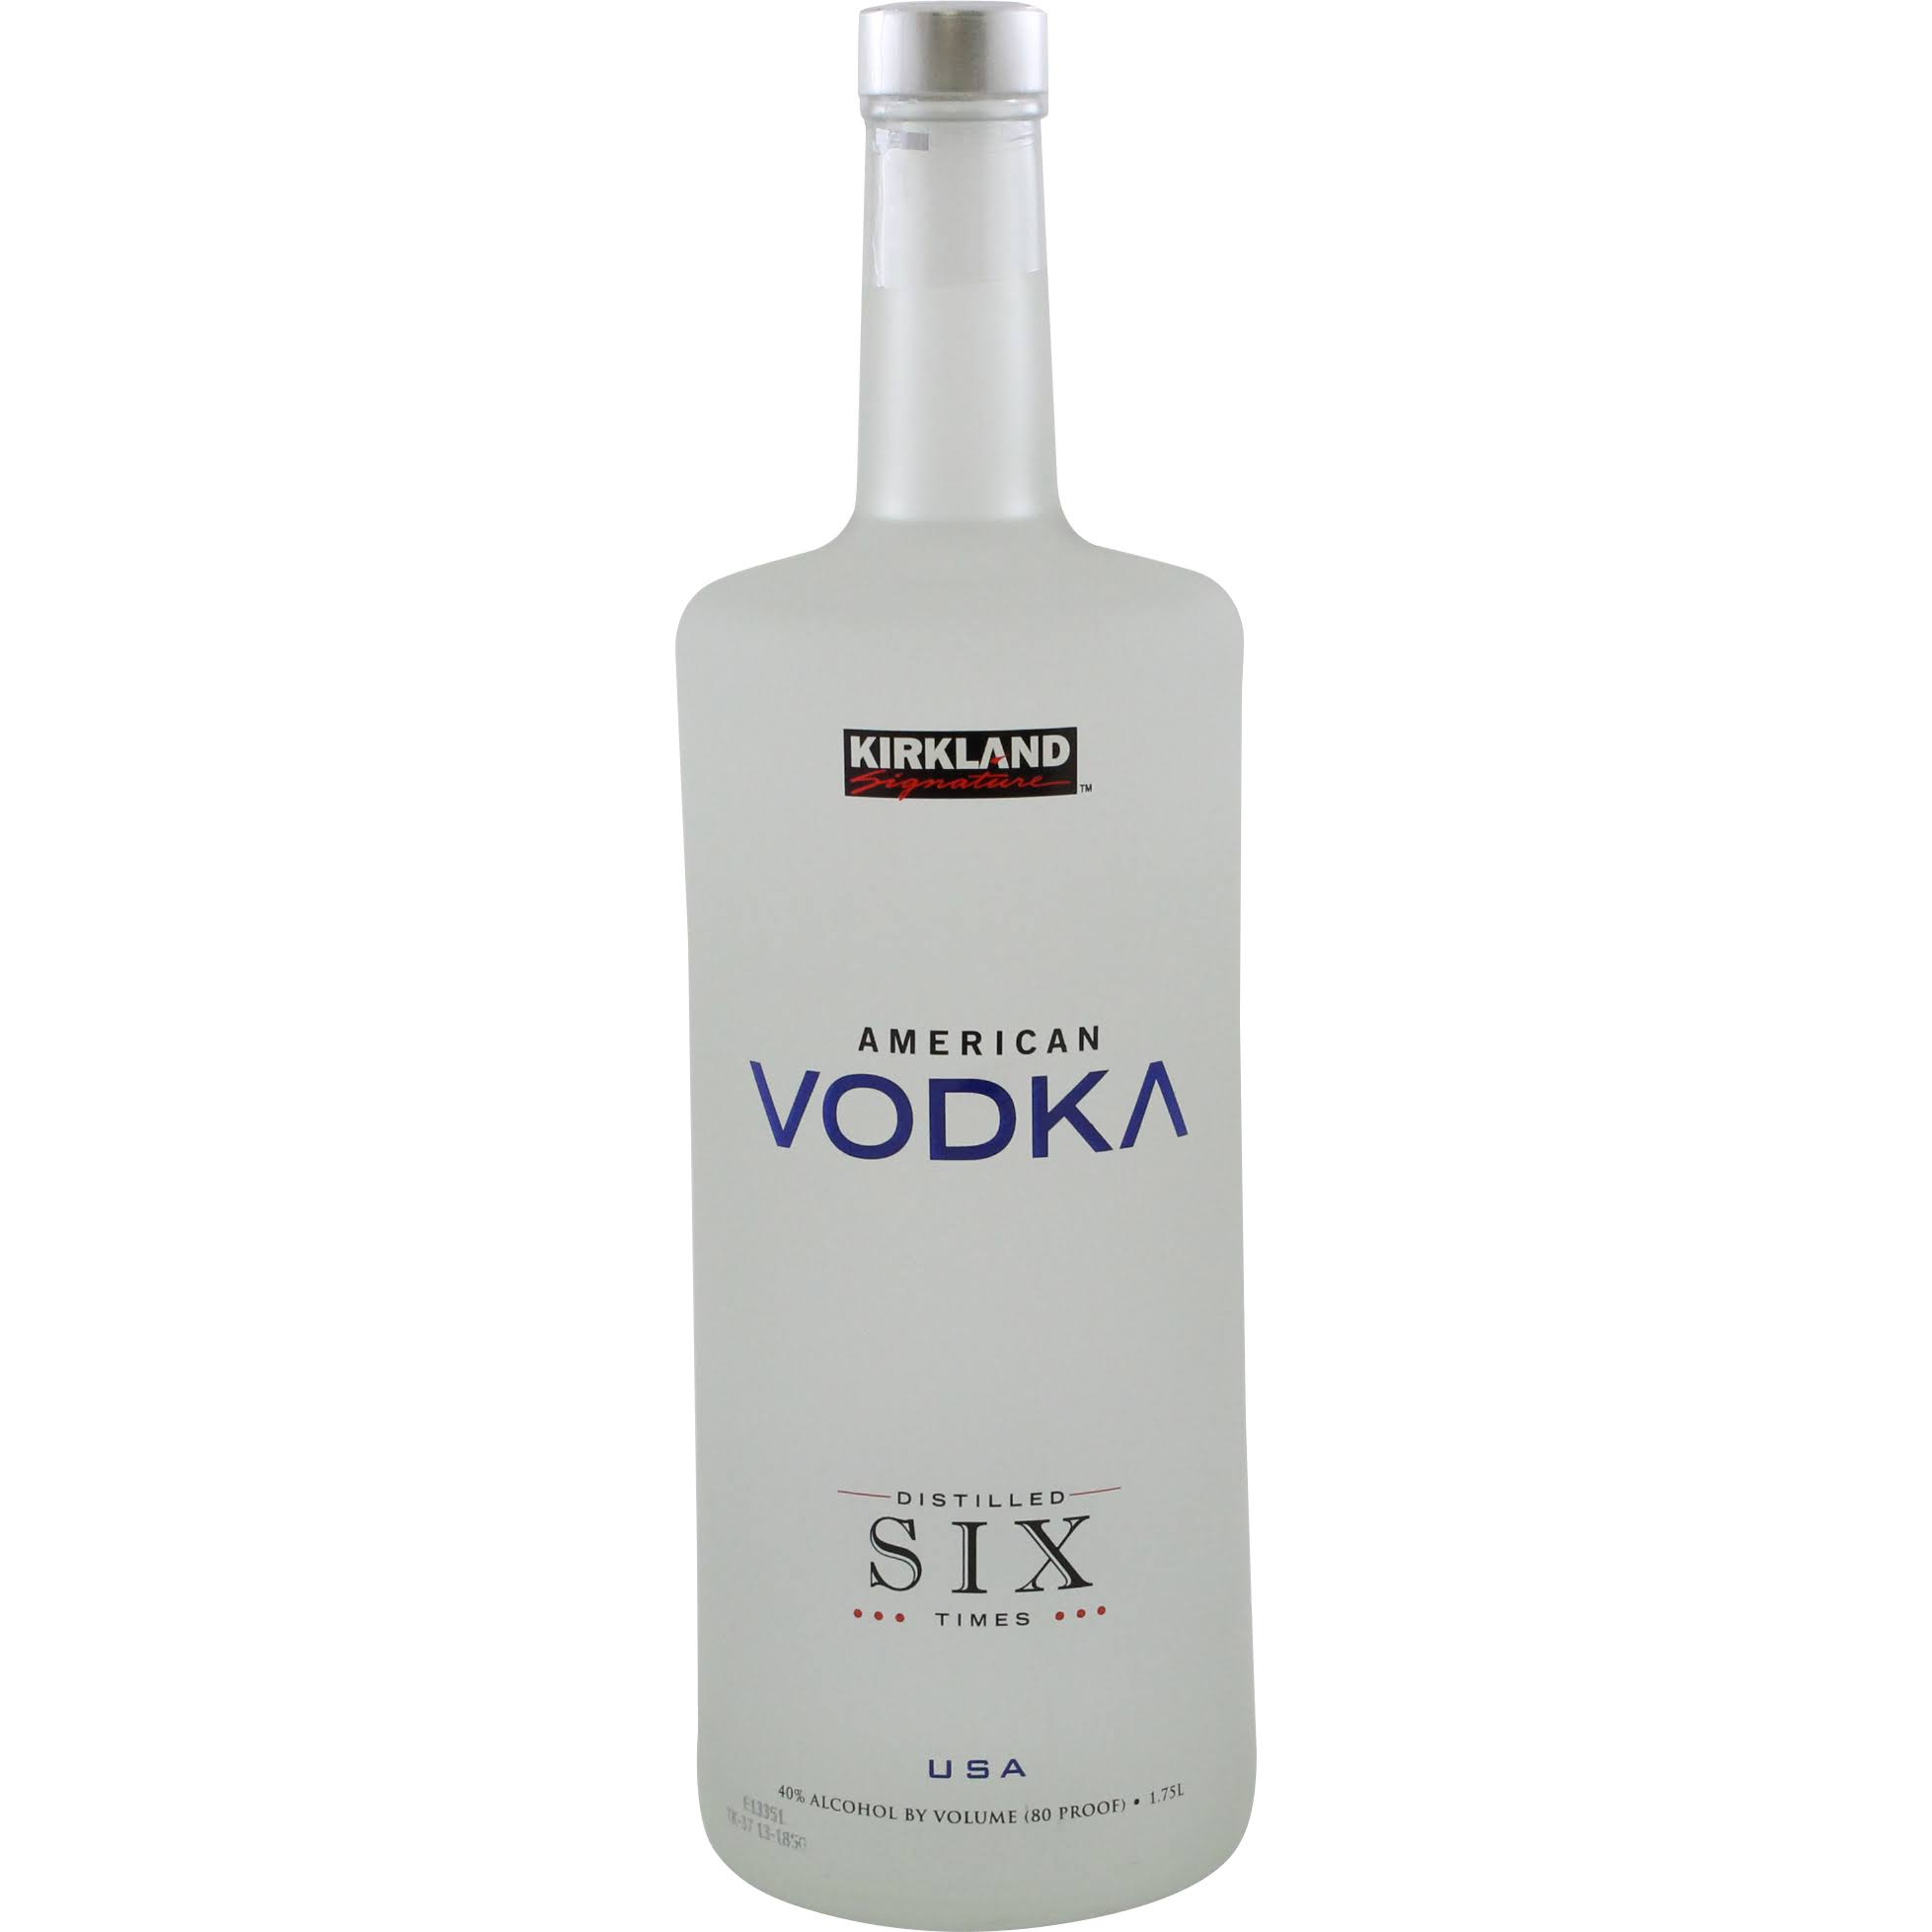 Kirkland Signature American Vodka - 1.75 L bottle